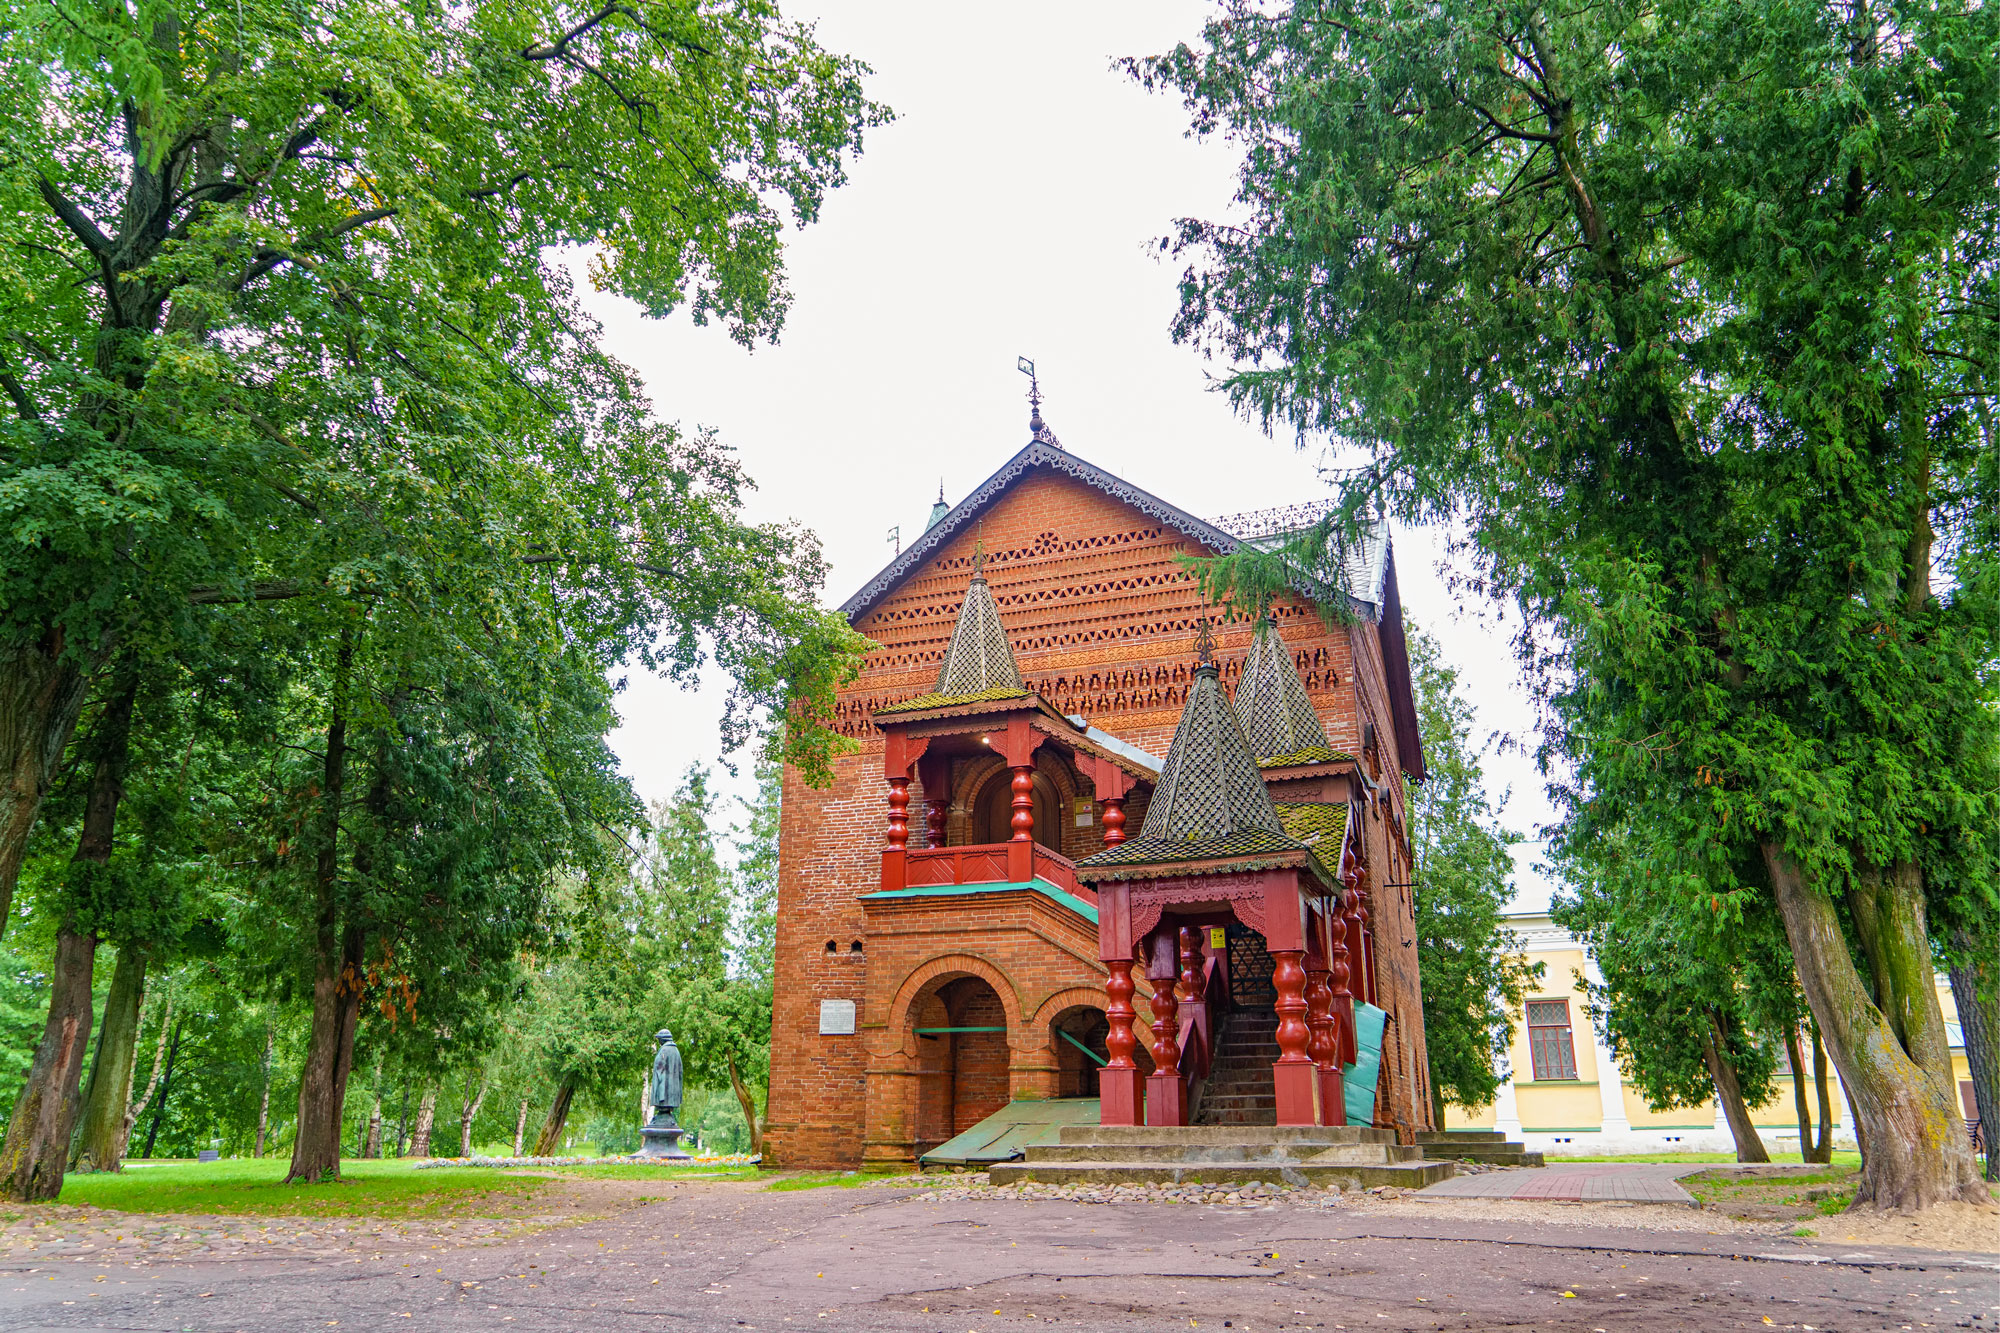 Каменная палата угличских князей. Фото: Maykova Galina / Shutterstock